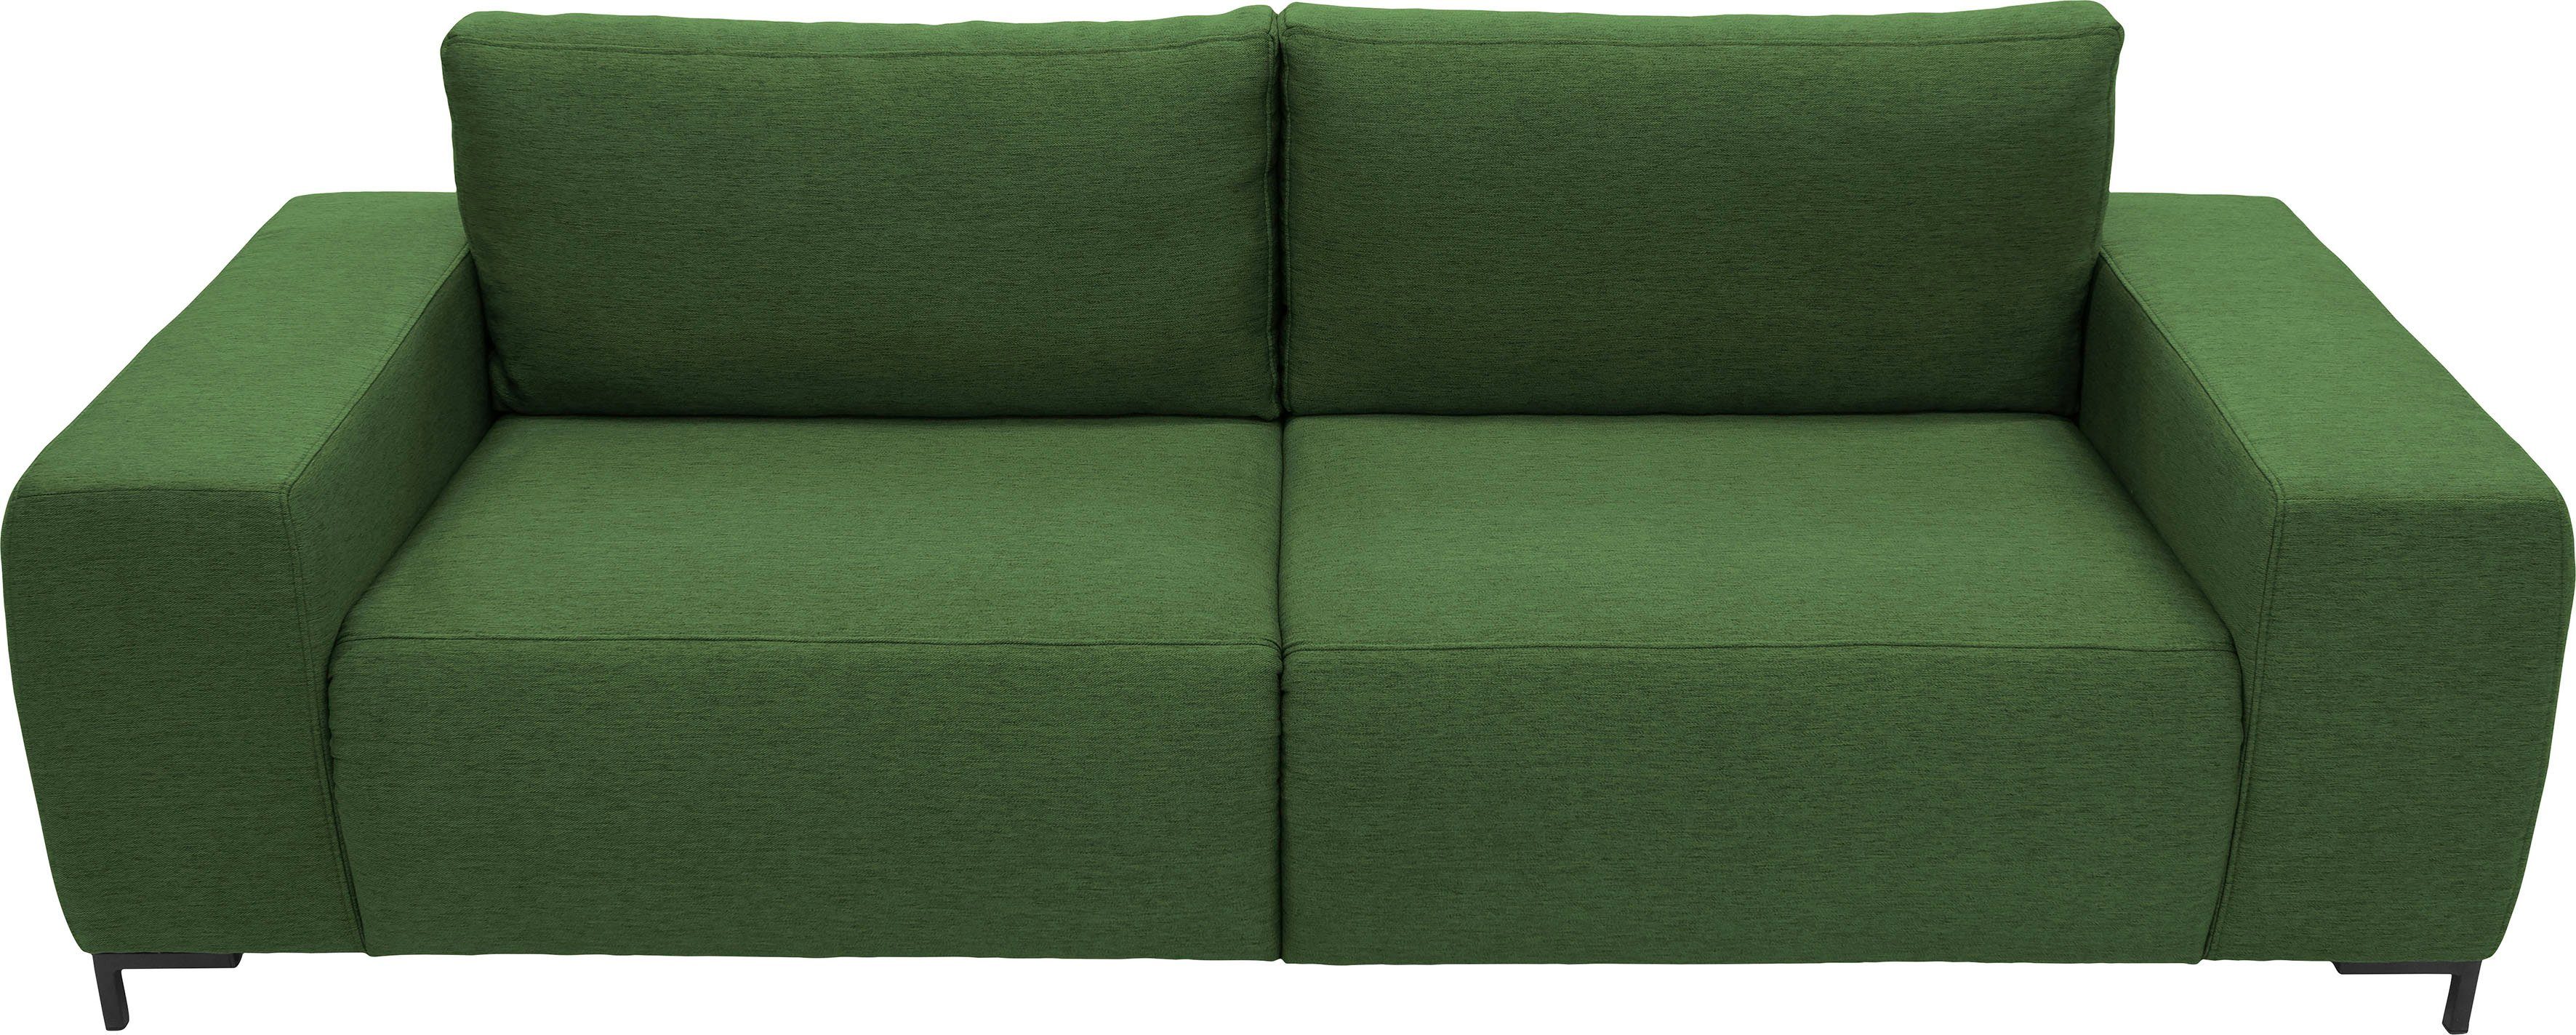 LOOKS by Joop 2 Linien, Wolfgang Bezugsqualitäten Big-Sofa Looks in VI, gerade